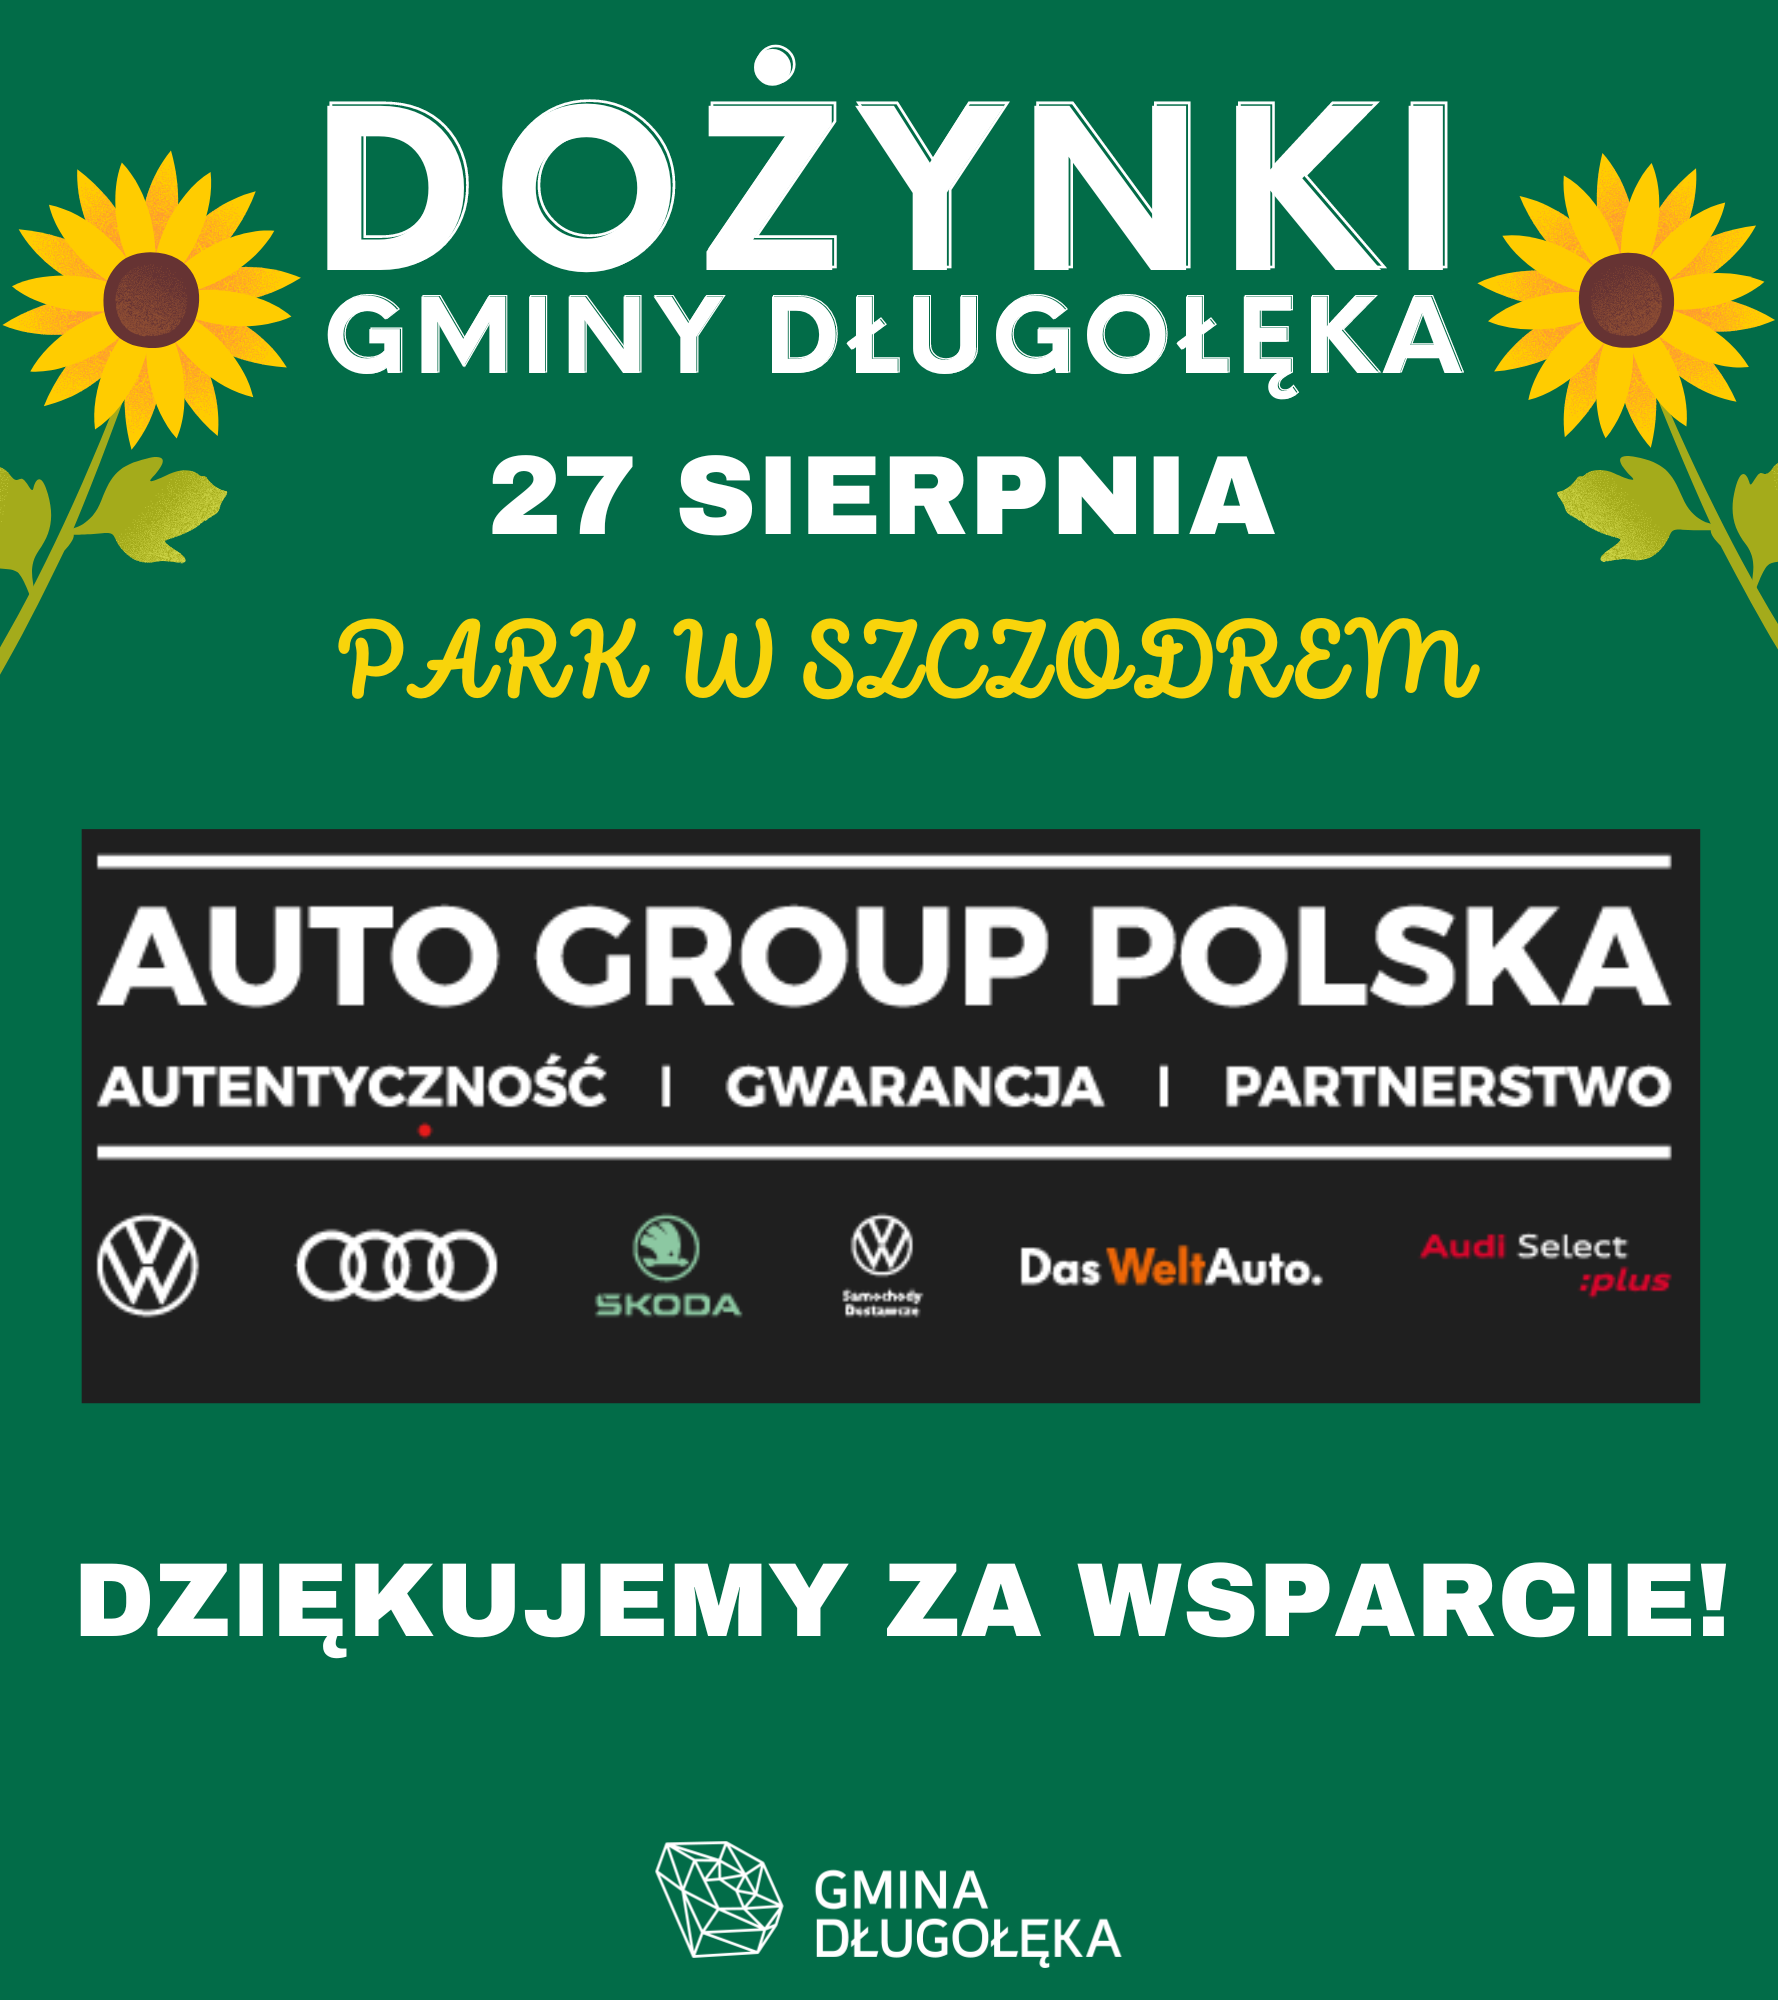 Auto Group Polska partnerem Dożynek Gminy Długołęka